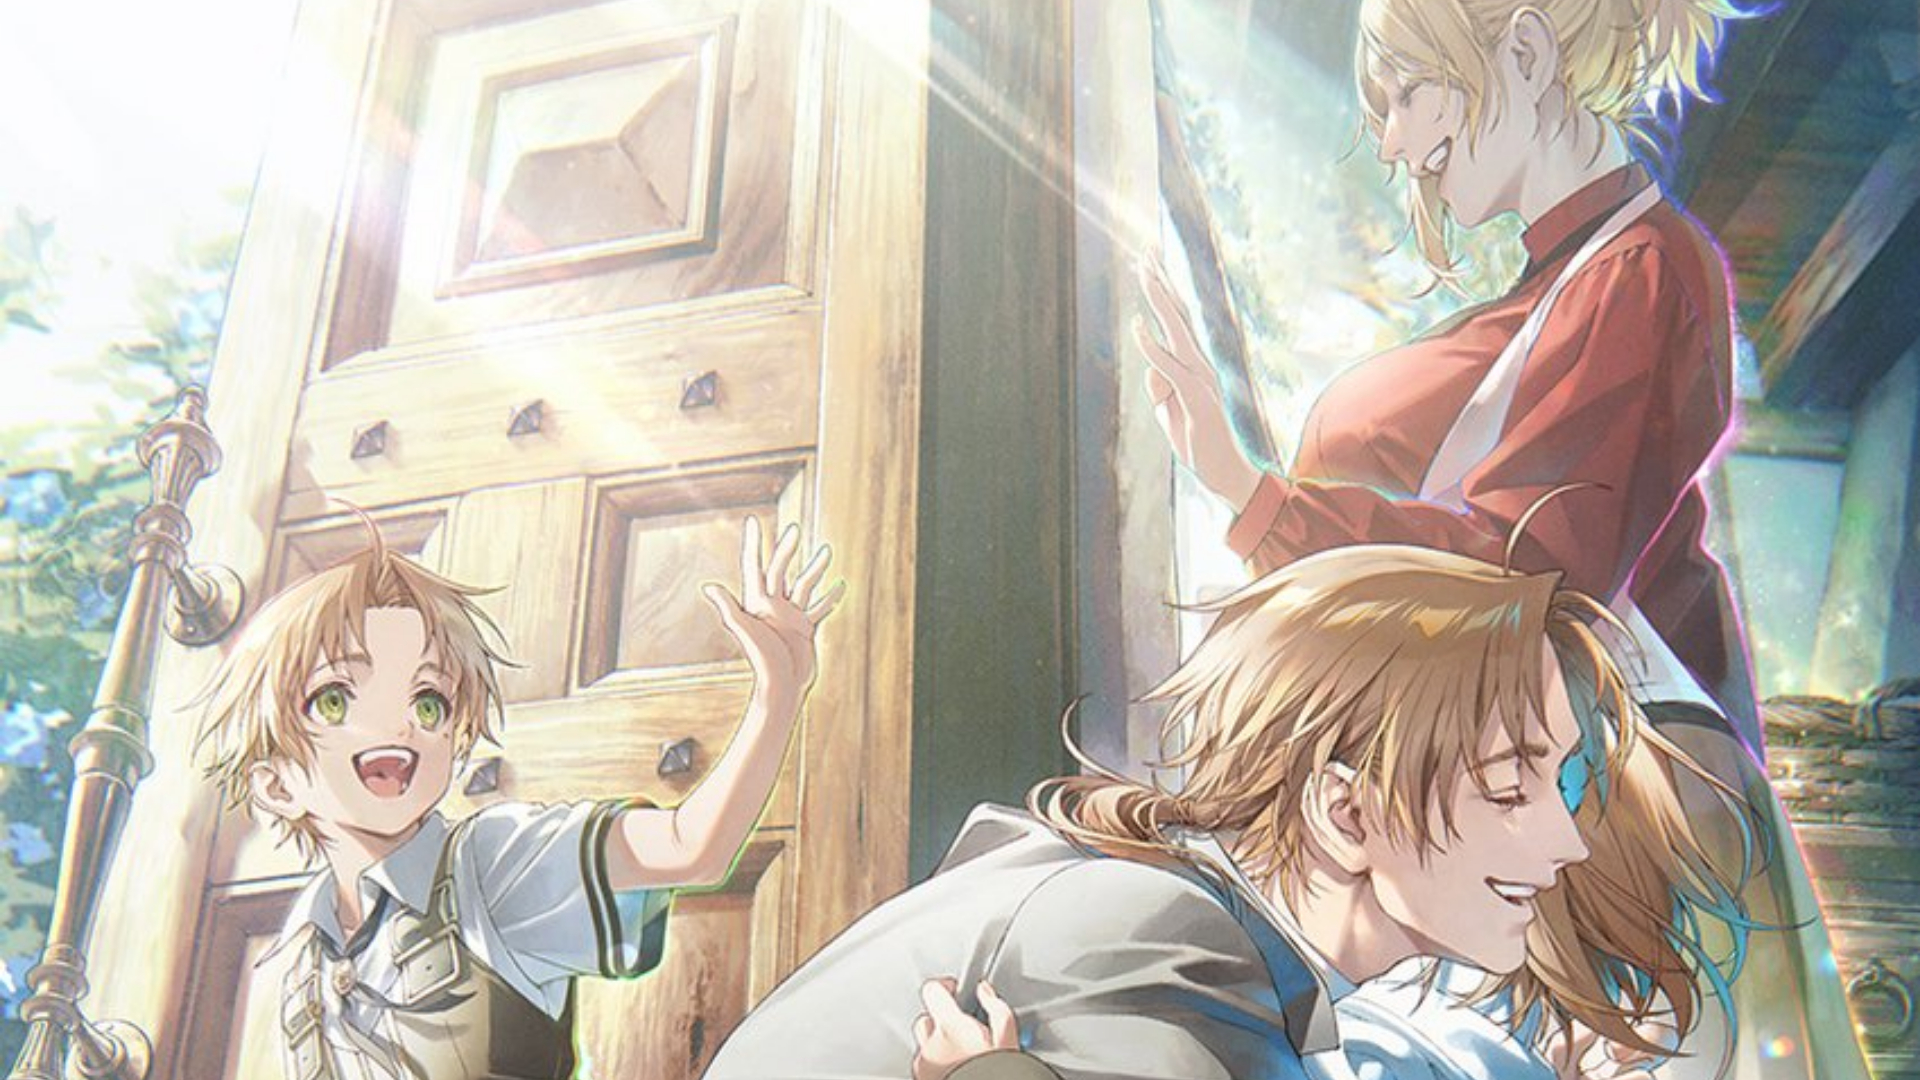 Mushoku Tensei: How to Get Started With the Light Novels, Manga & Anime